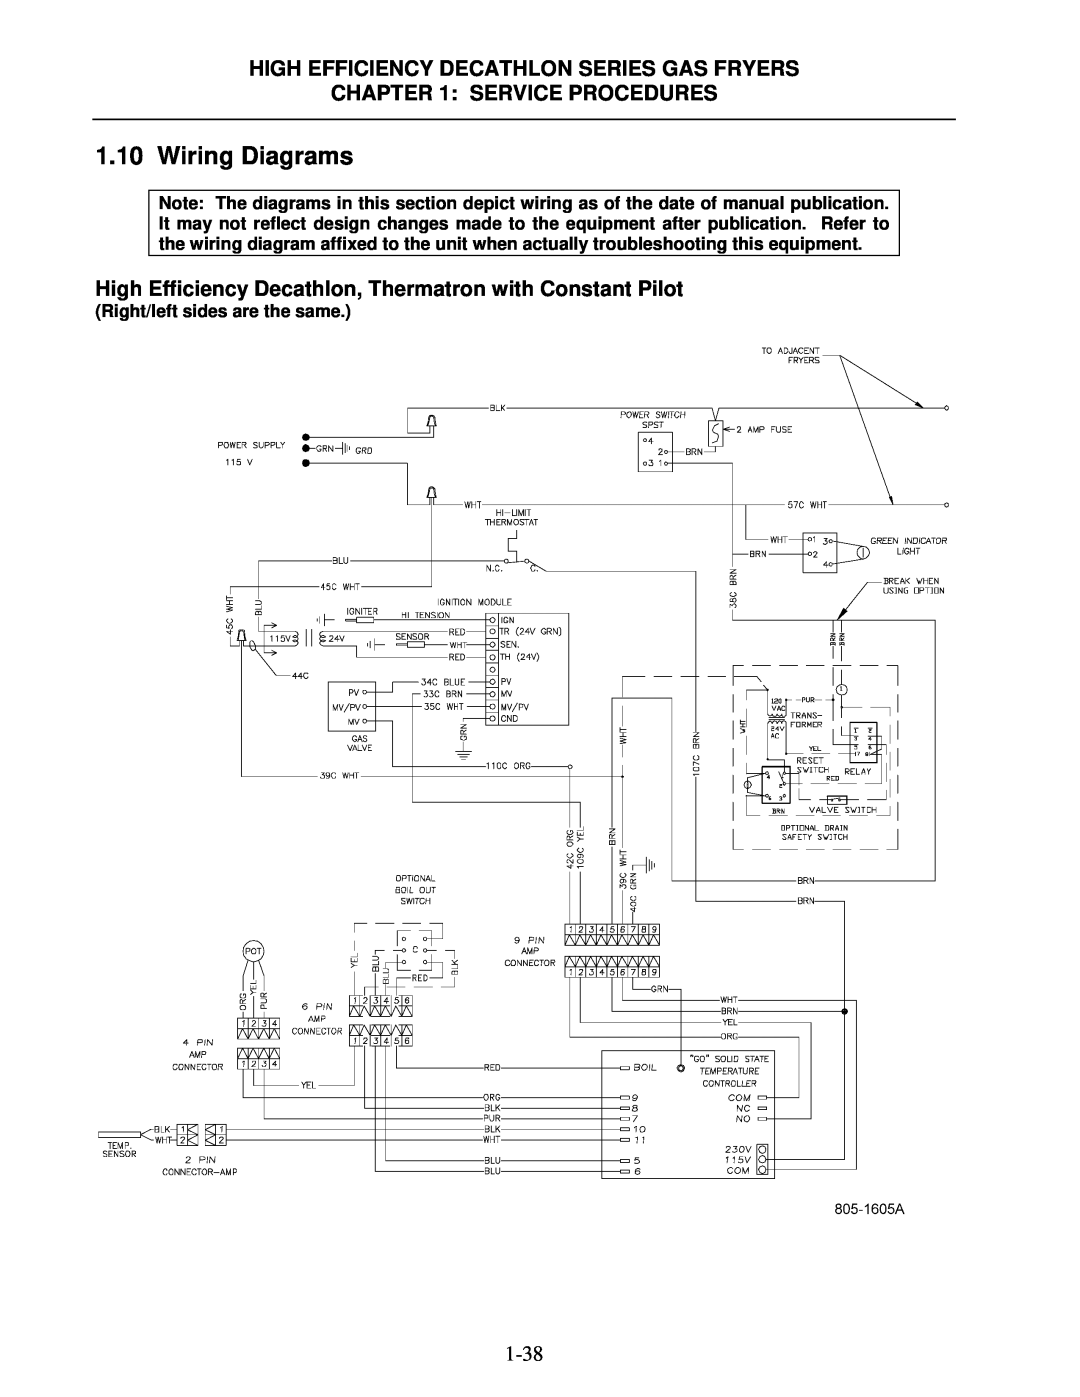 Frymaster FPHD manual Wiring Diagrams, High Efficiency Decathlon Series Gas Fryers, Service Procedures 